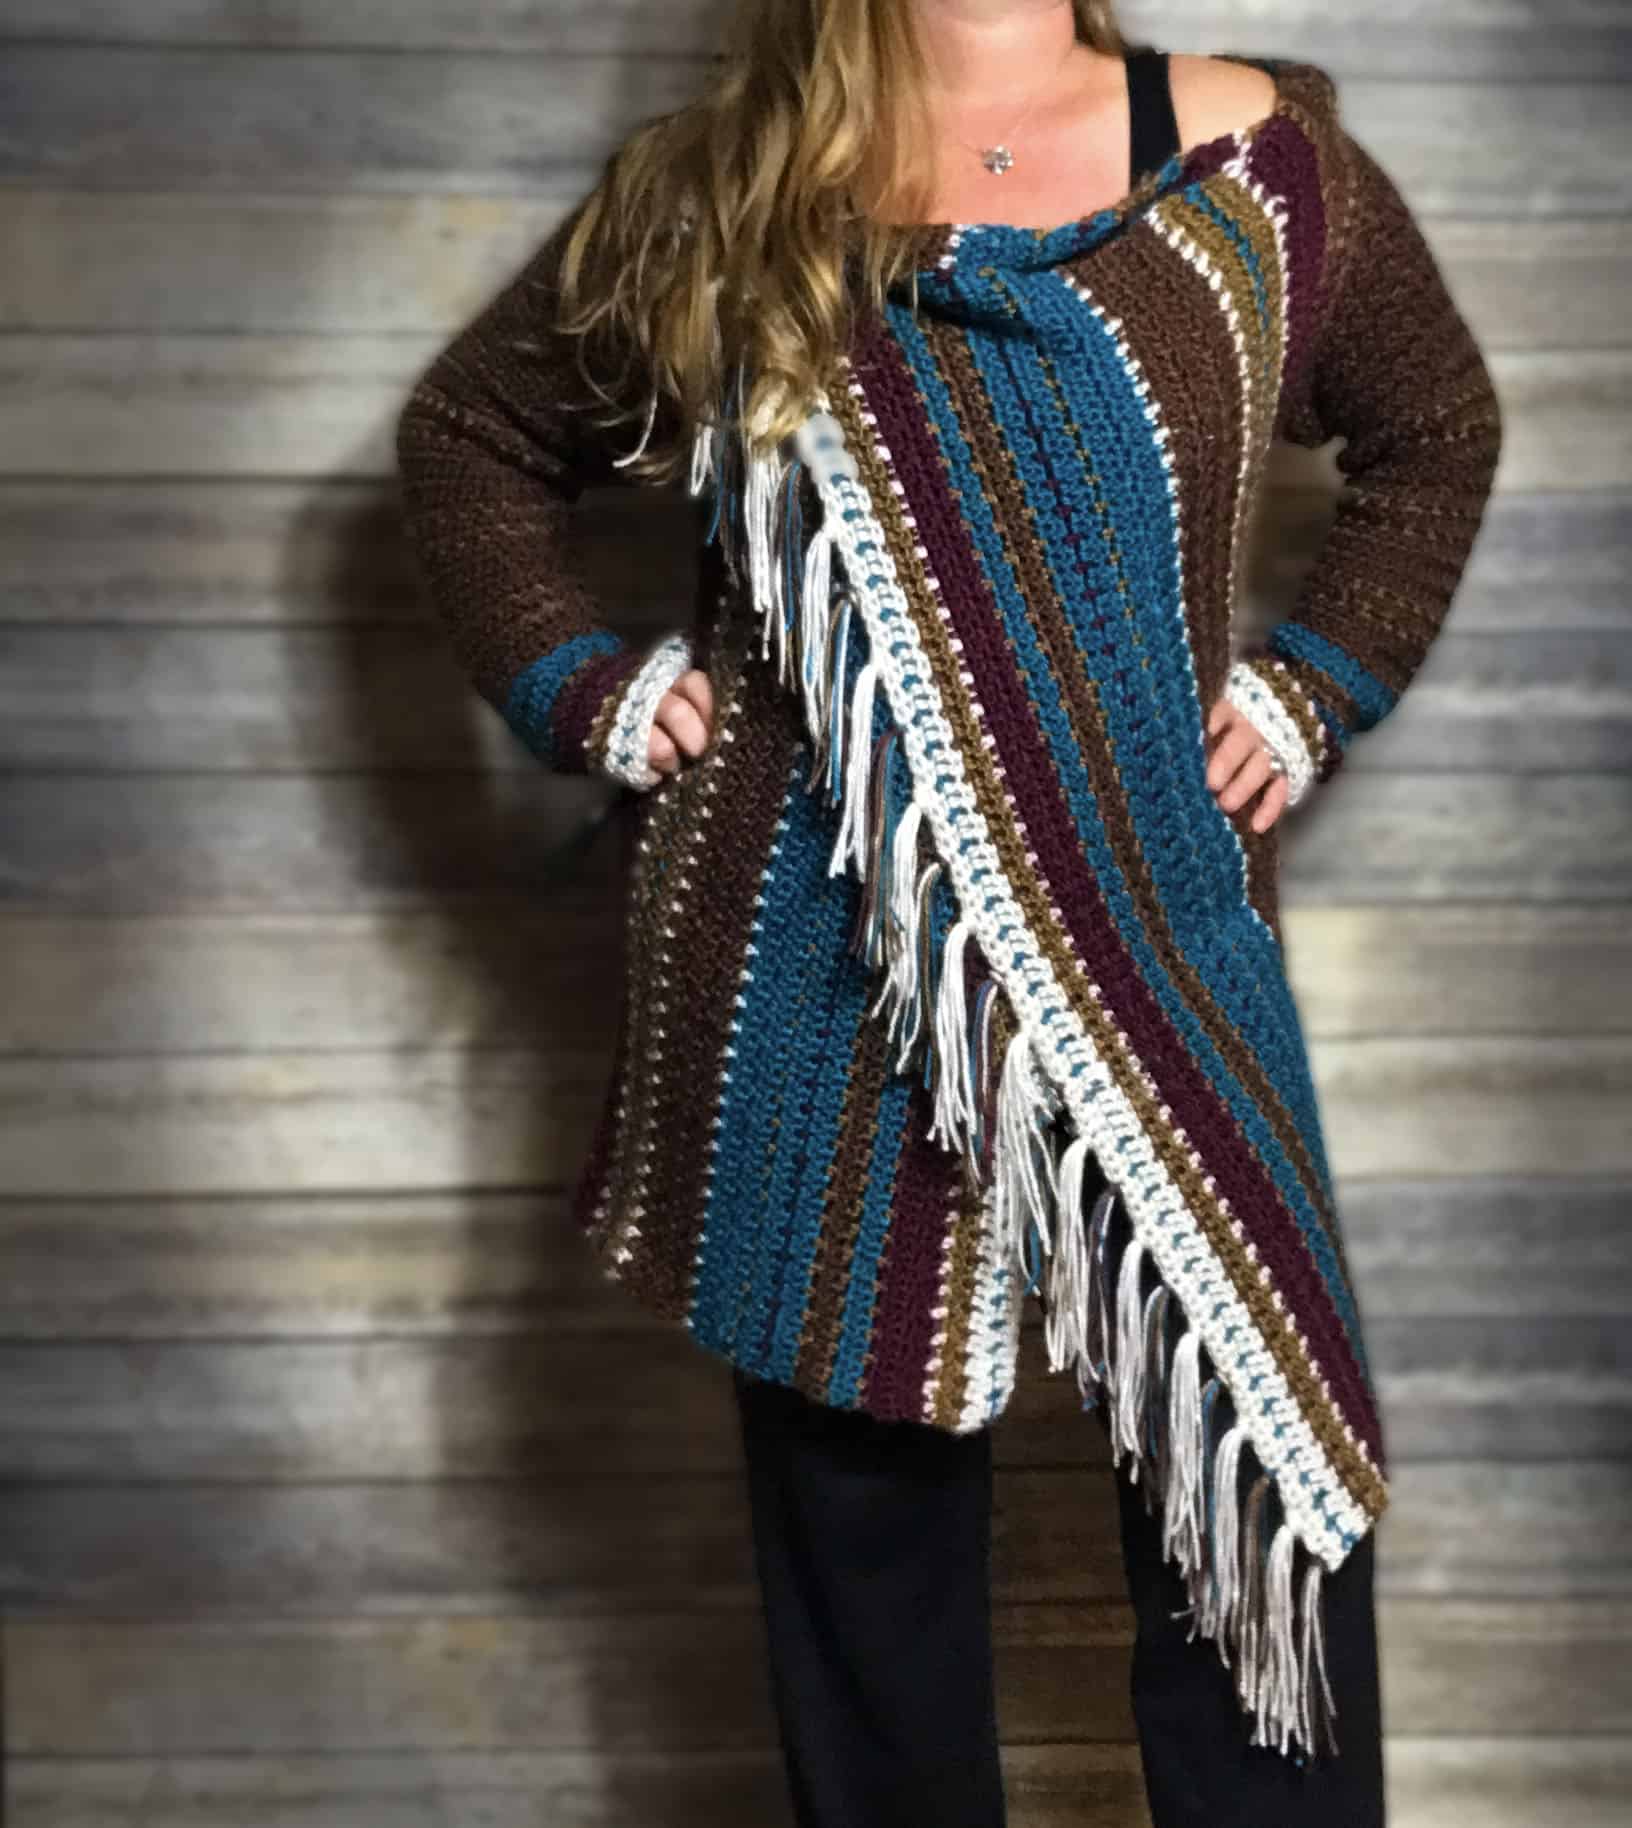 Navajo Blanket Cardigan